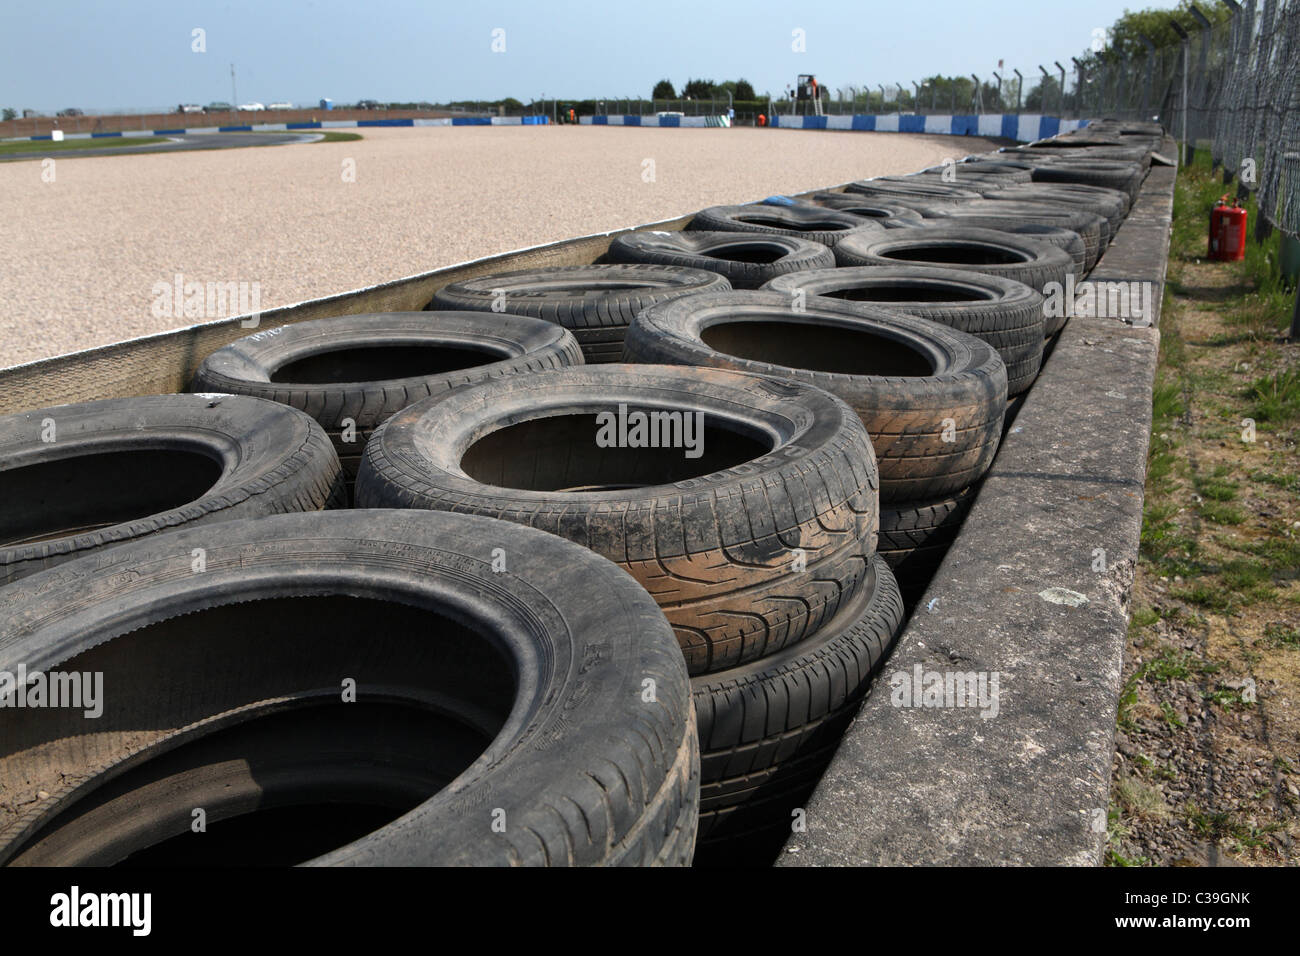 Tyre wall at racing circuit Stock Photo